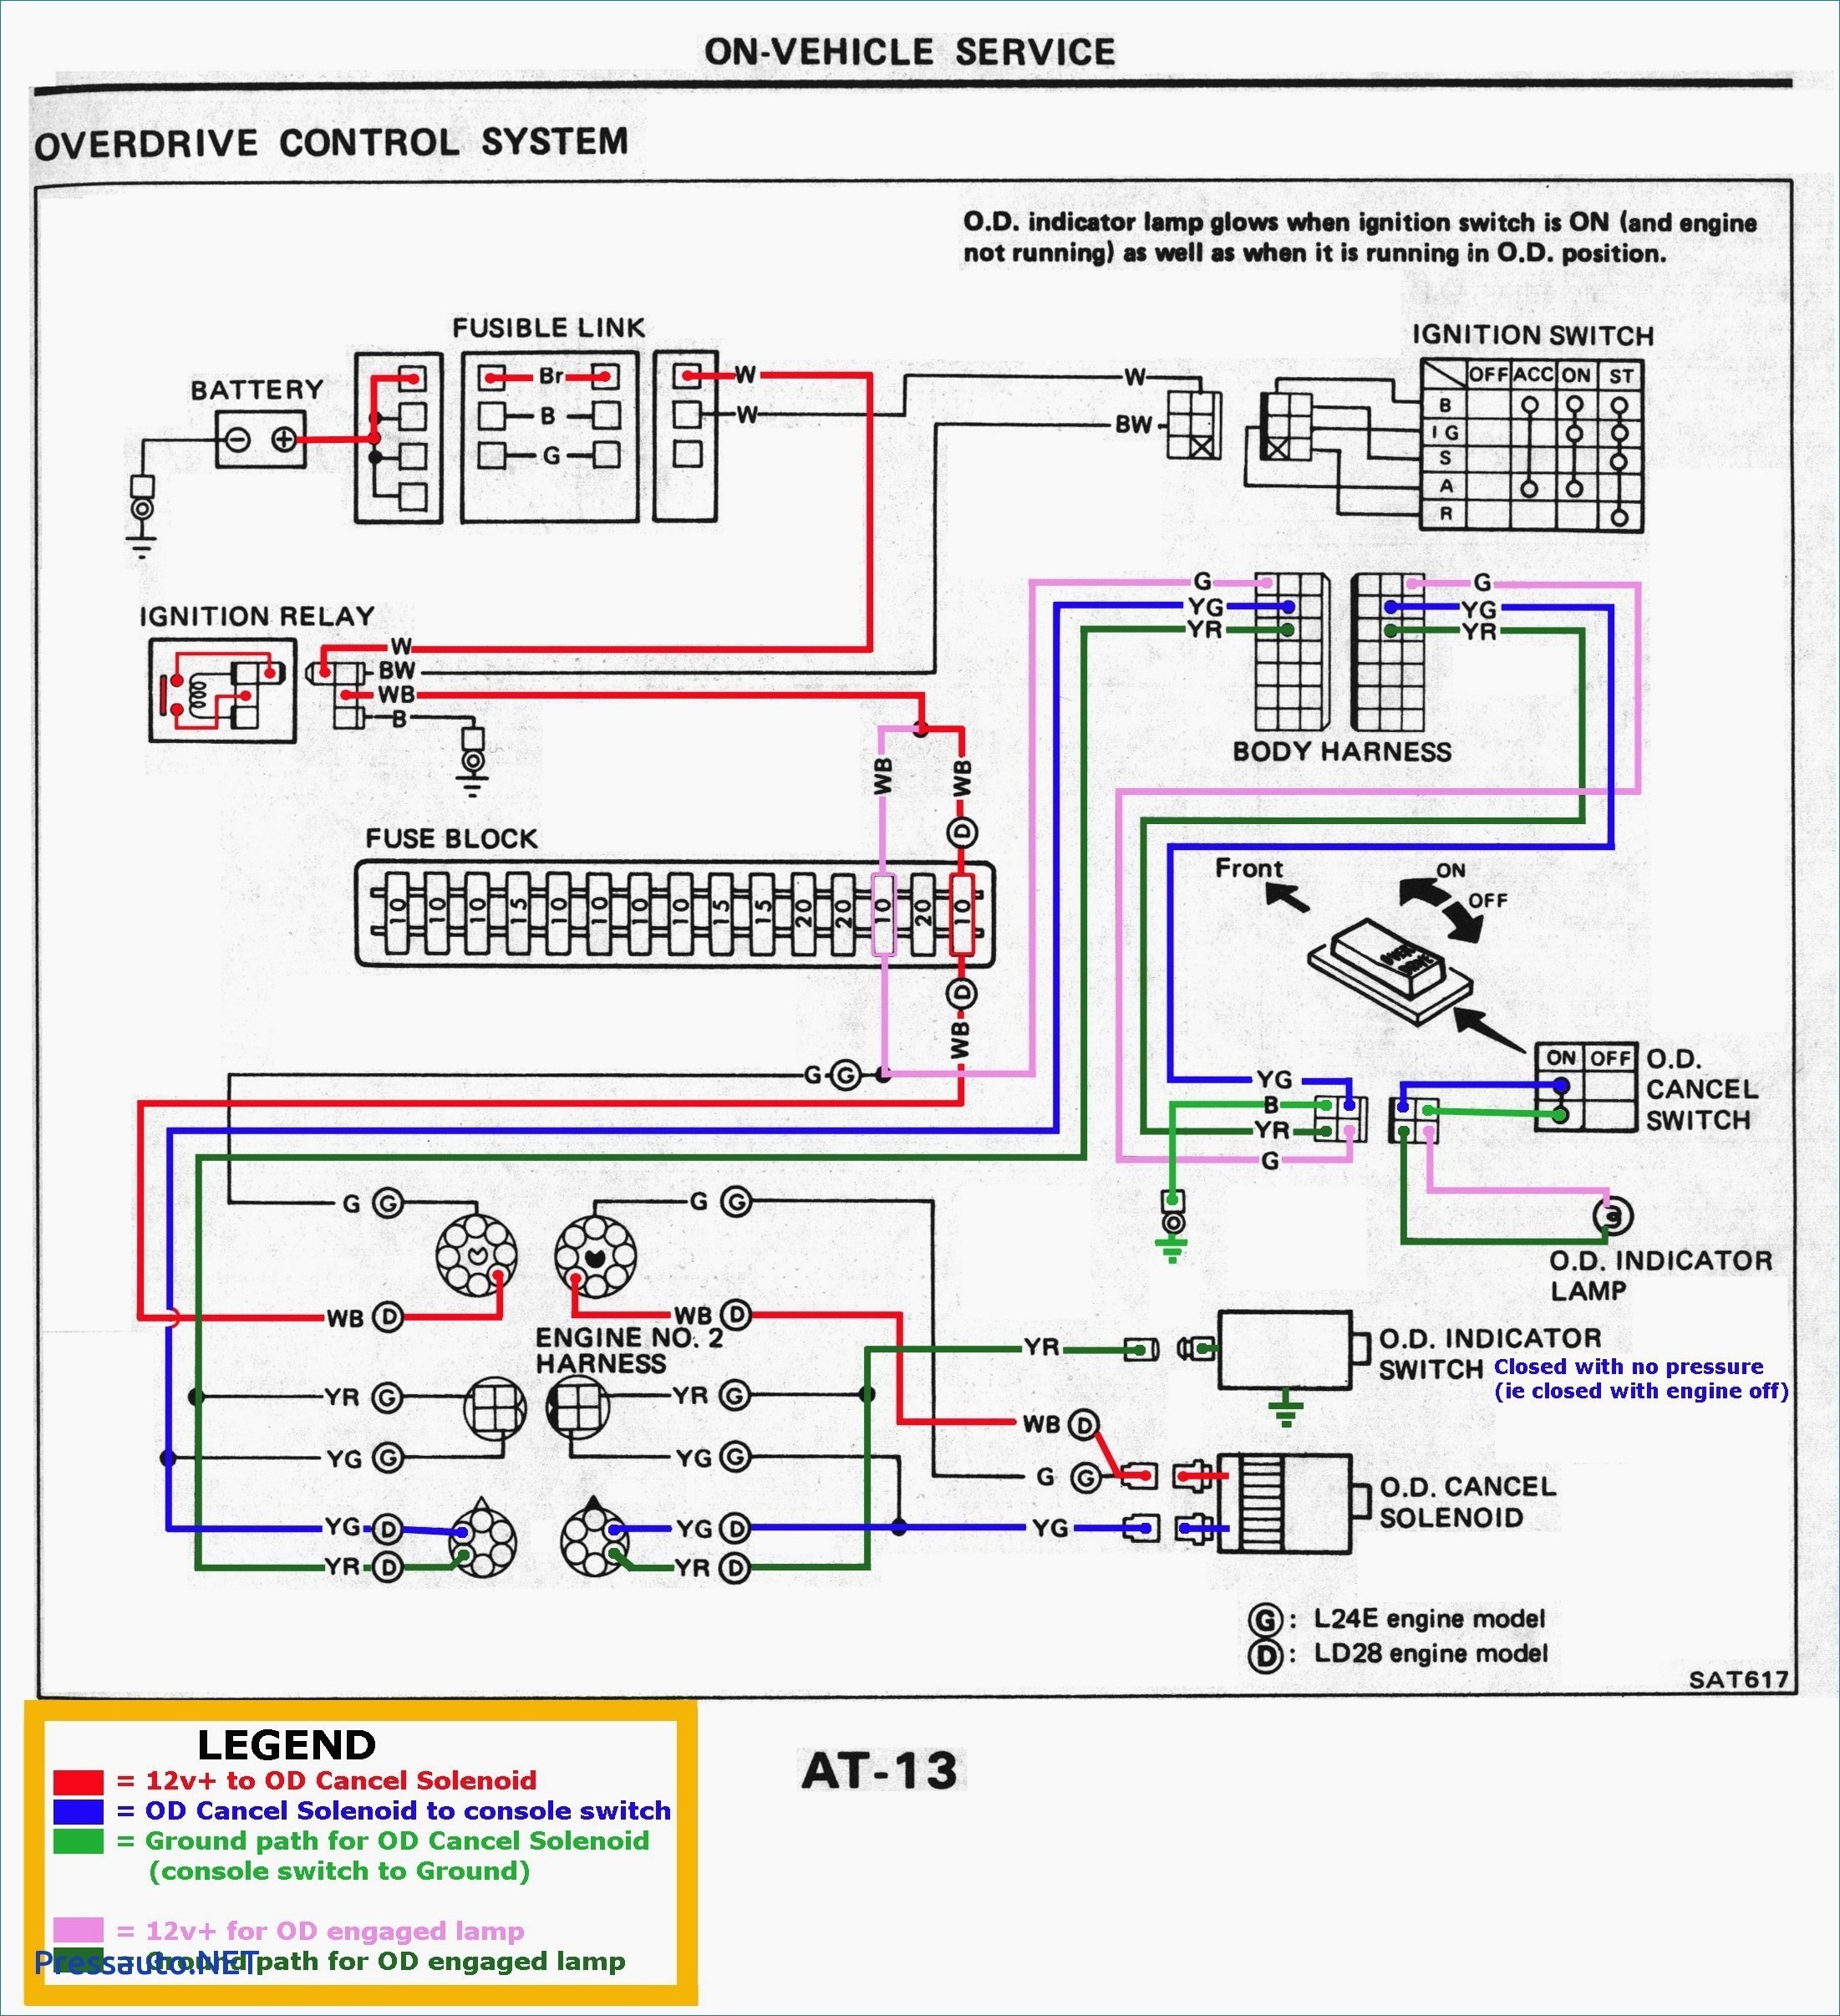 1998 Honda Accord V6 Engine Diagram 2006 Honda Accord Fuse Box Diagram Of 1998 Honda Accord V6 Engine Diagram